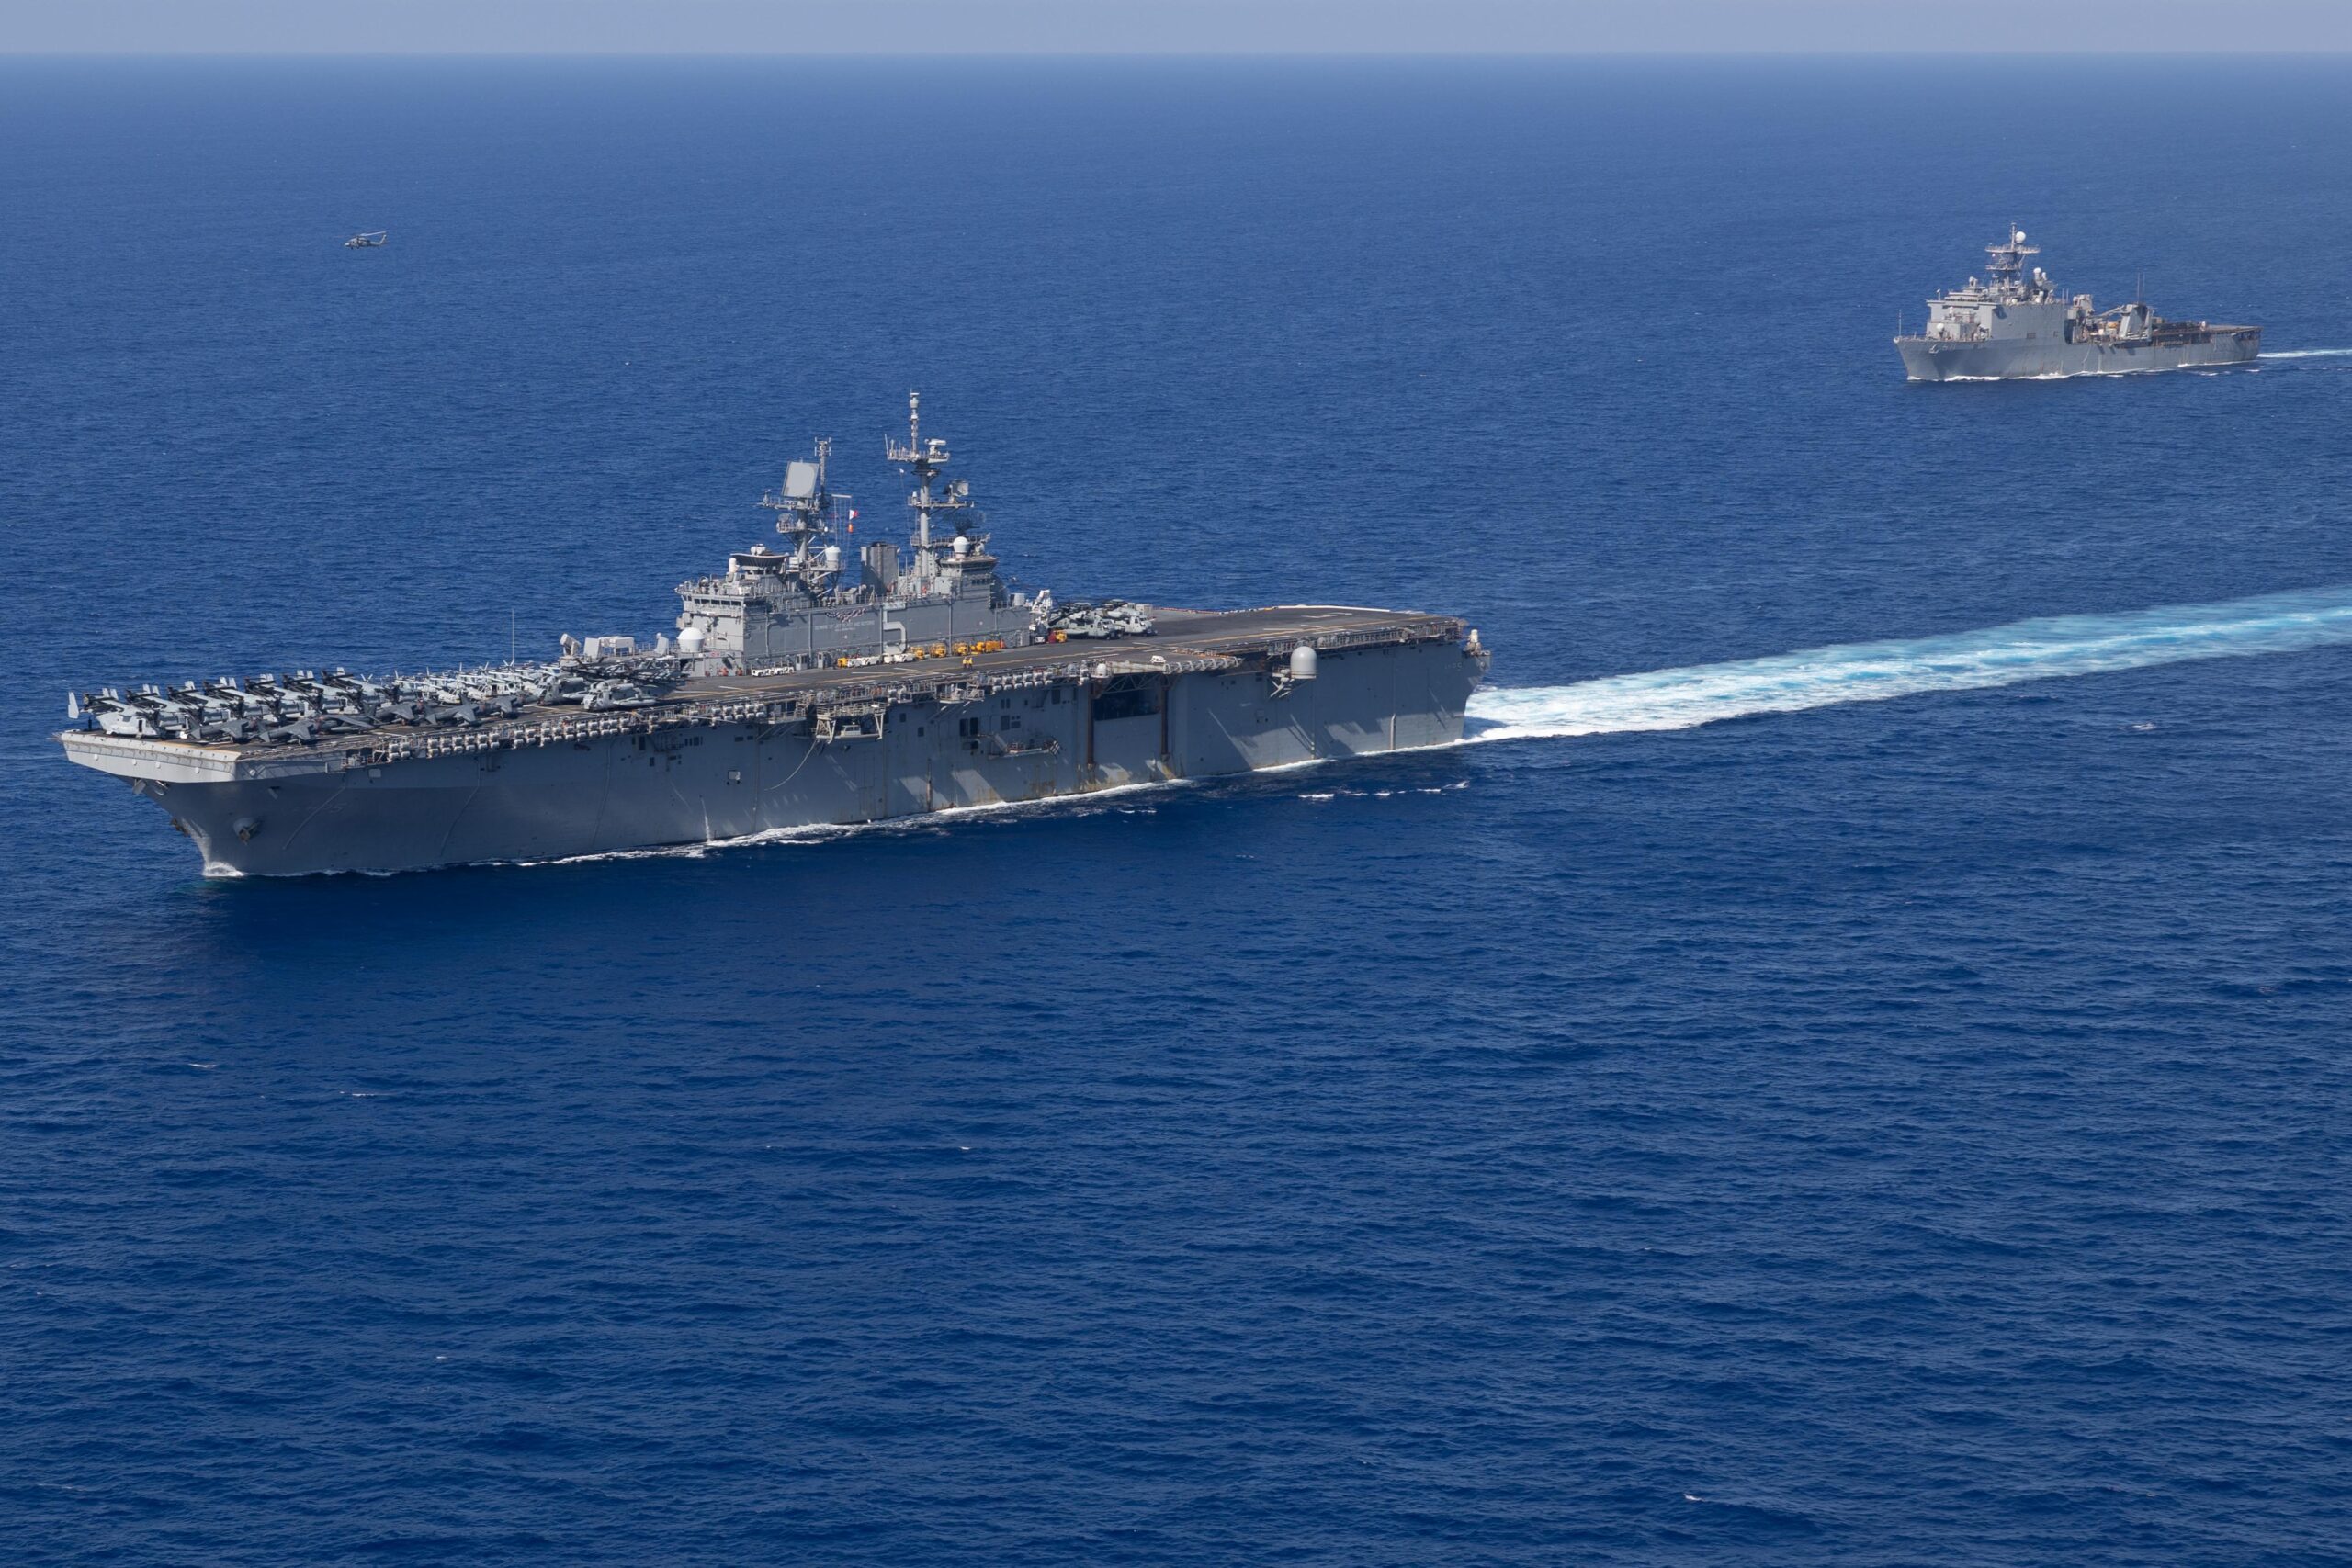 USS Bataan underway at sea with USS Carter in background